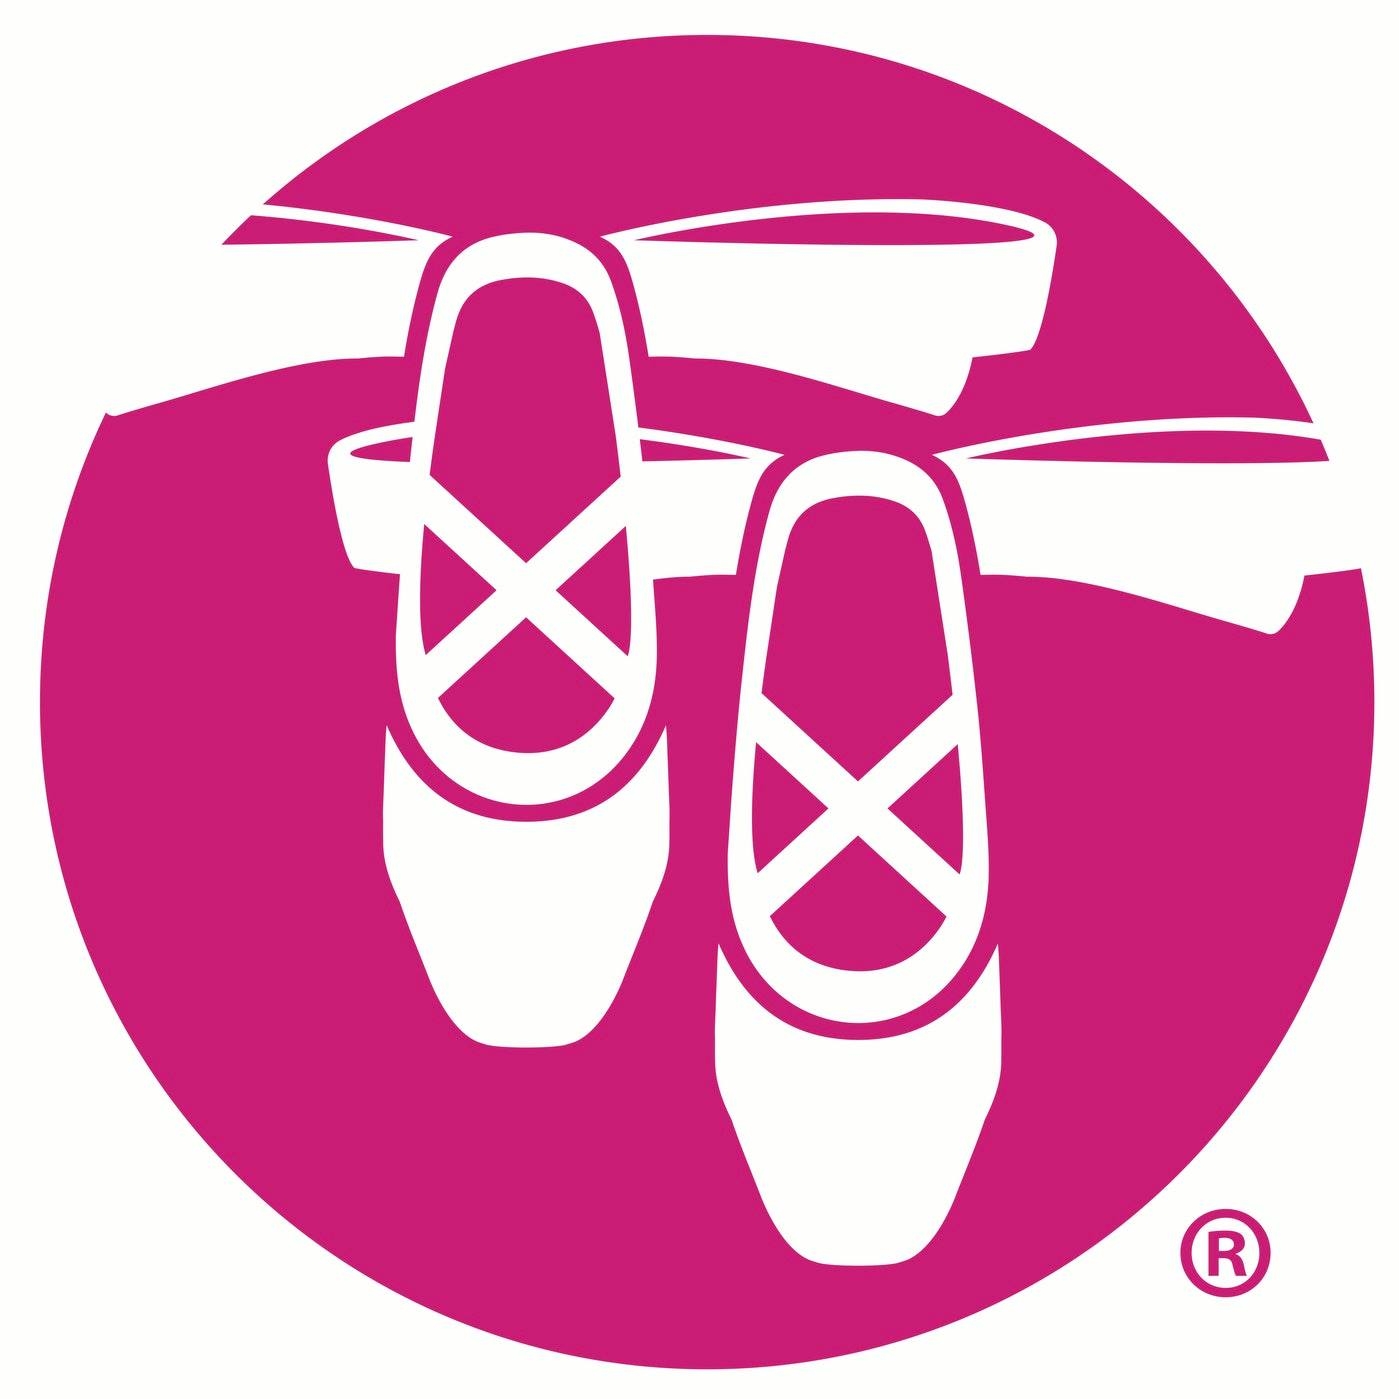 Tippi Toes logo